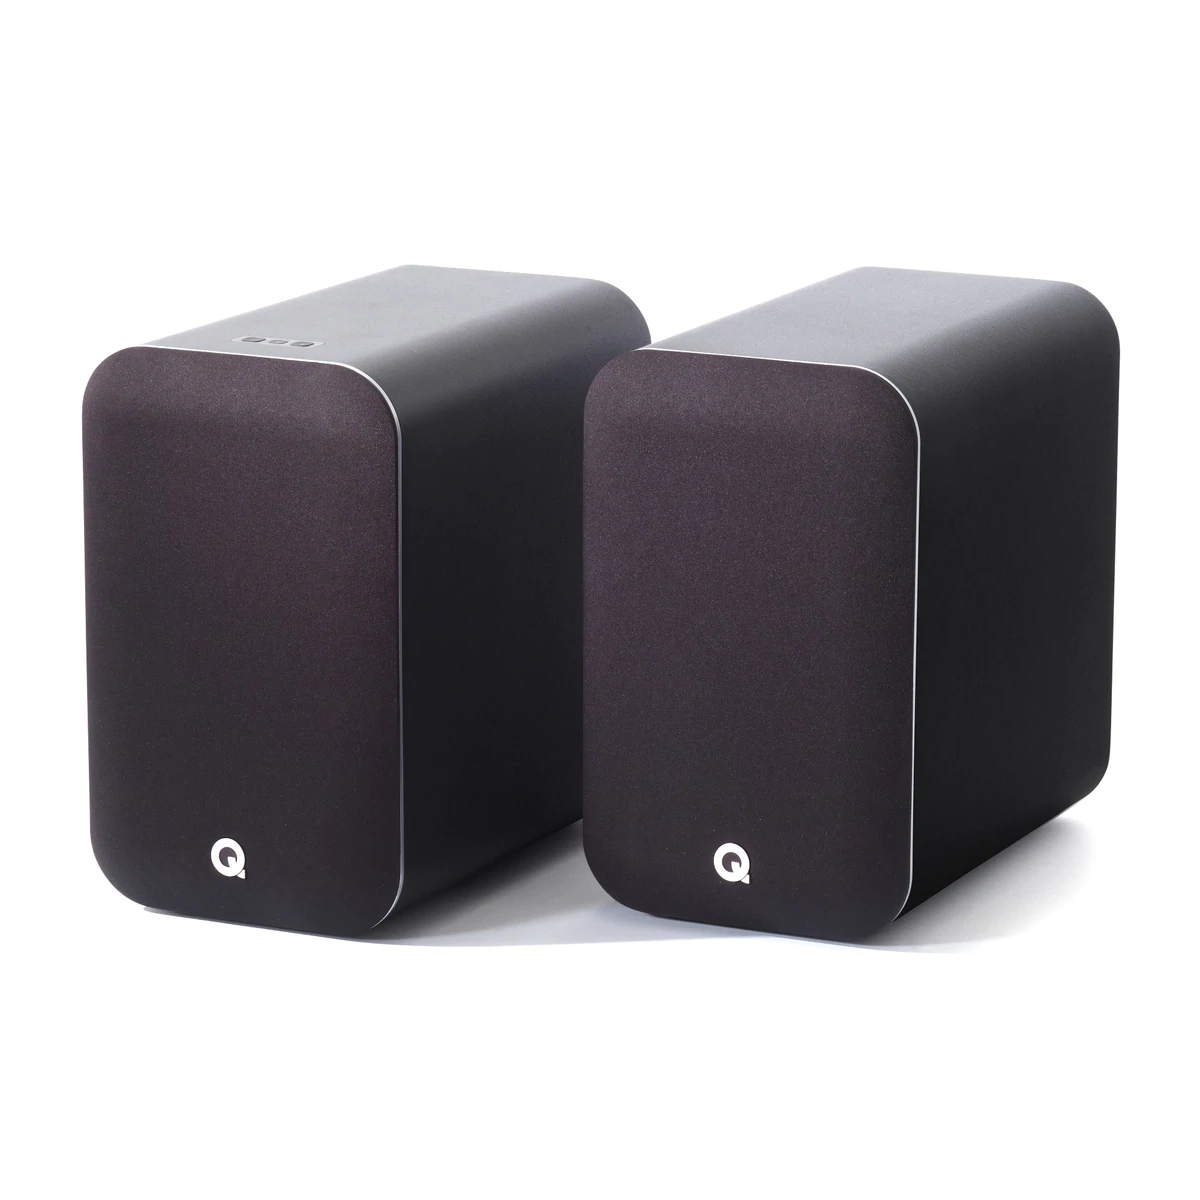 Полочная акустика Q-Acoustics Q M20 HD (QA7610) Black полочная акустика gershman acoustics x 1 antique